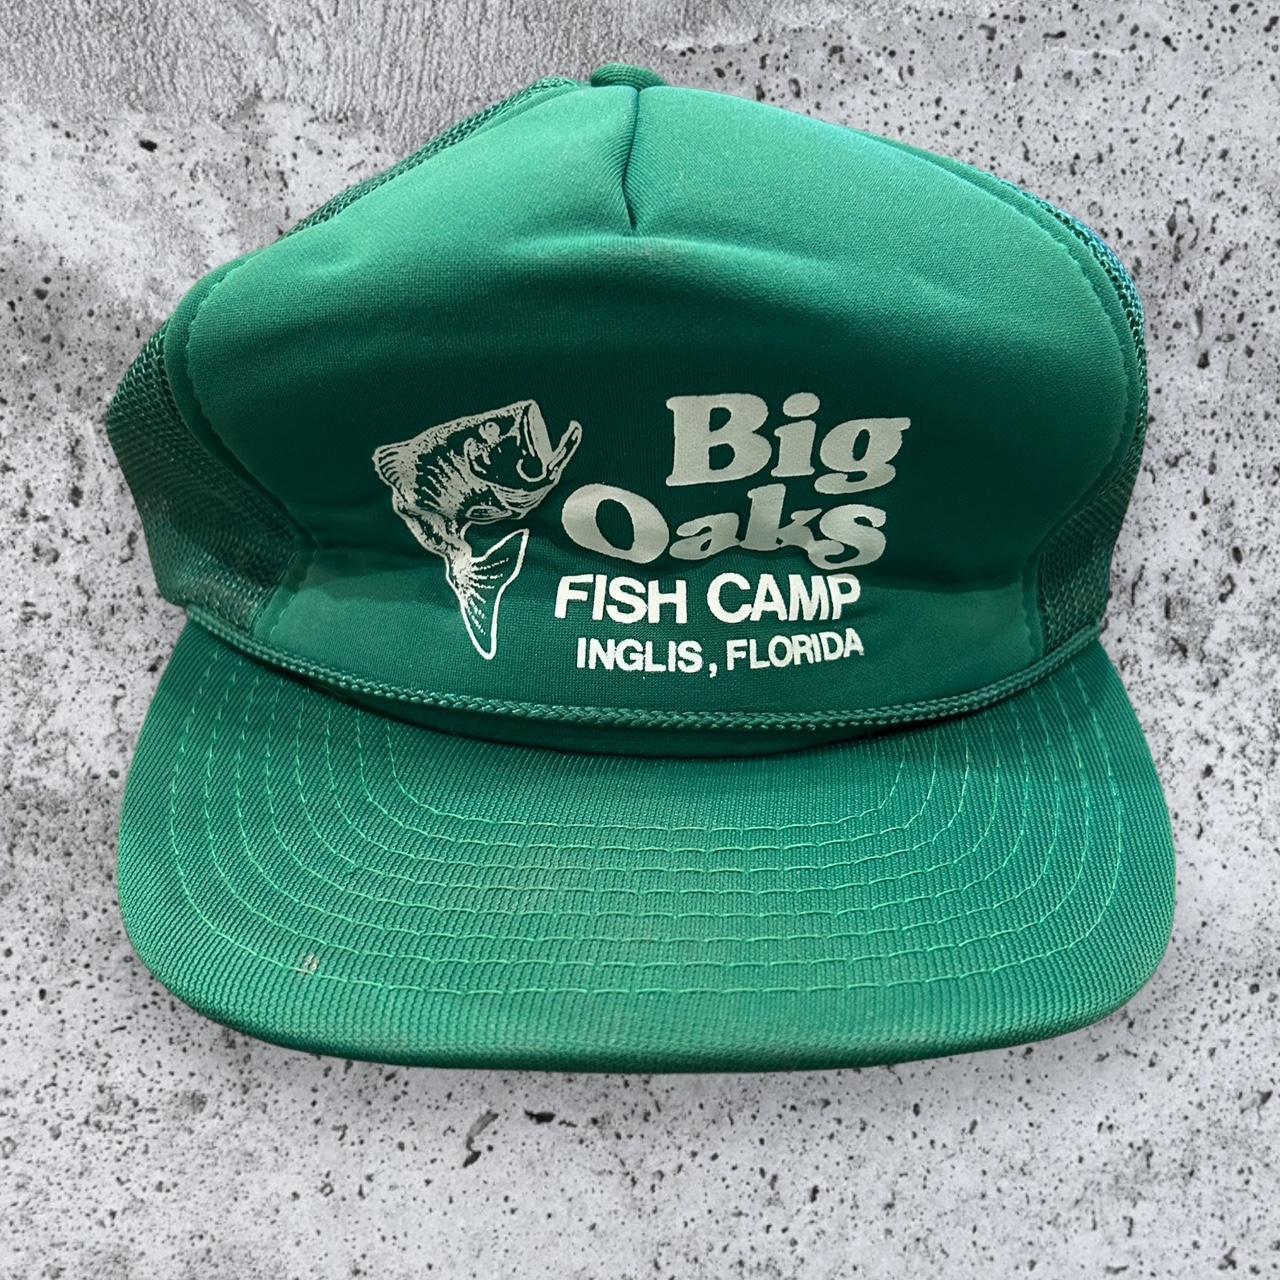 Vintage Green Fishing Hat One Size Fits - Depop